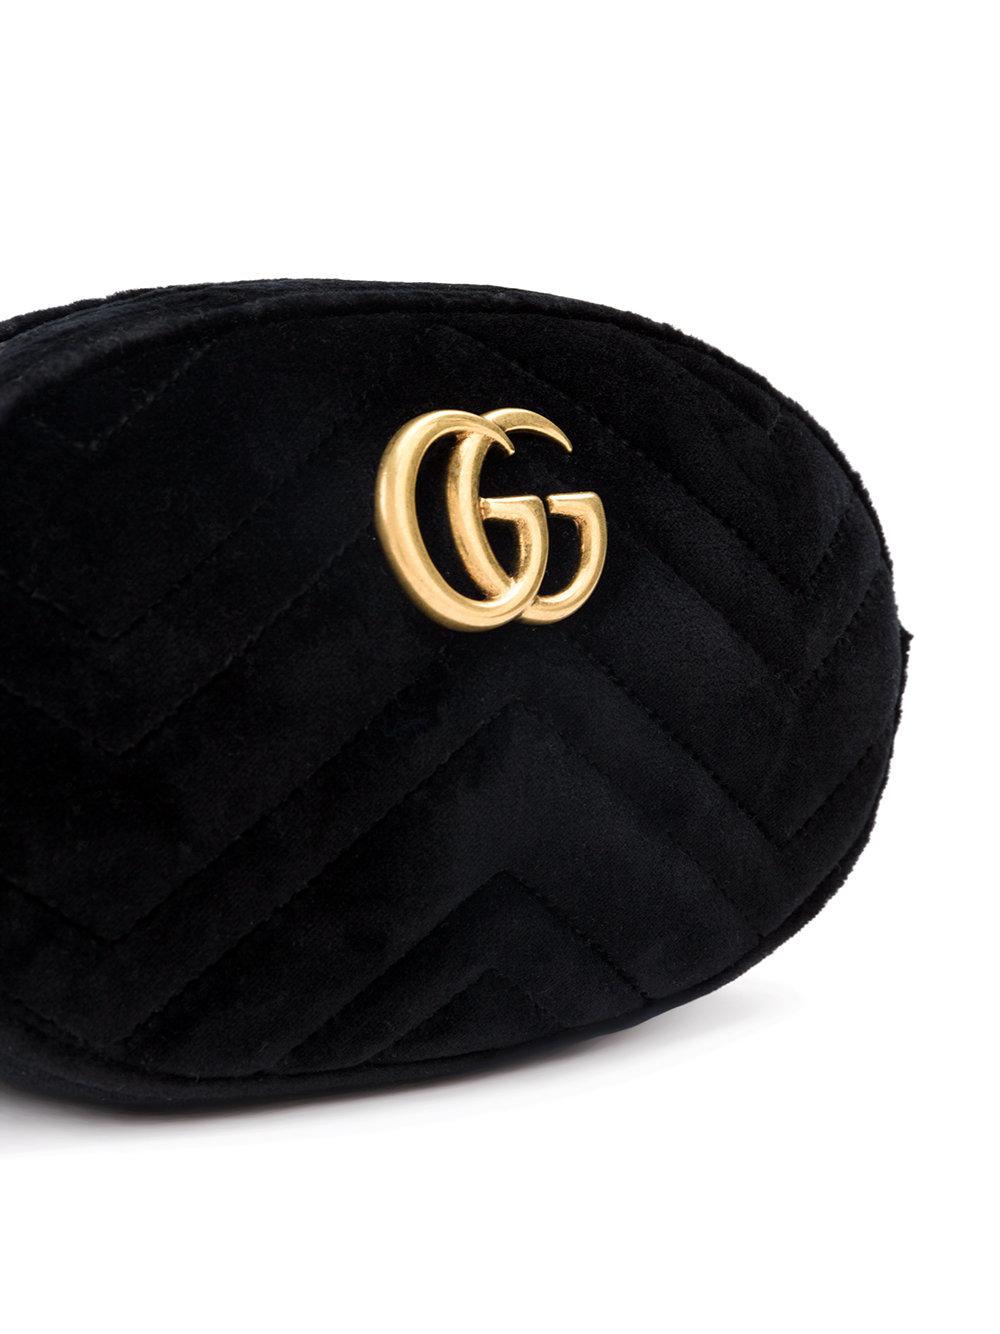 Gucci Marmont Velvet Belt Bag in Black - Lyst